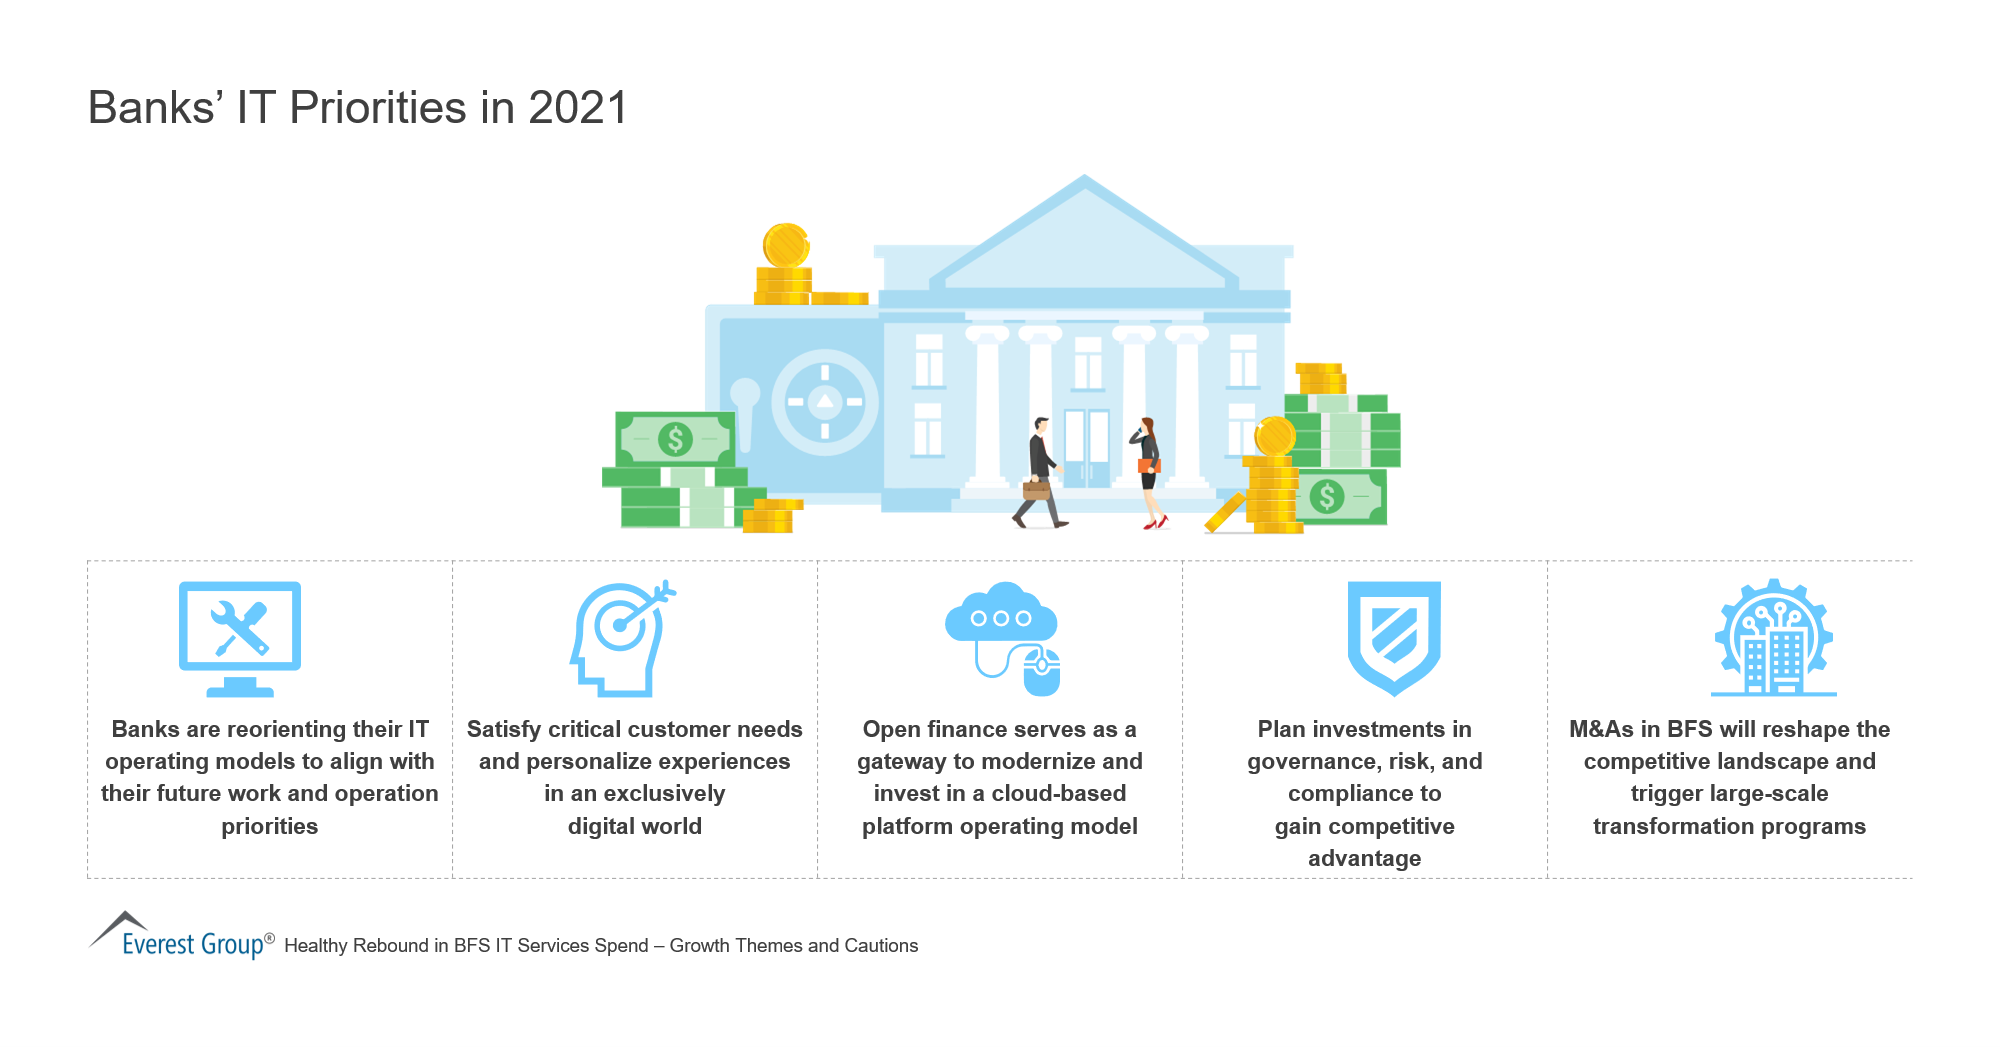 IT Priorities of Banks in 2021